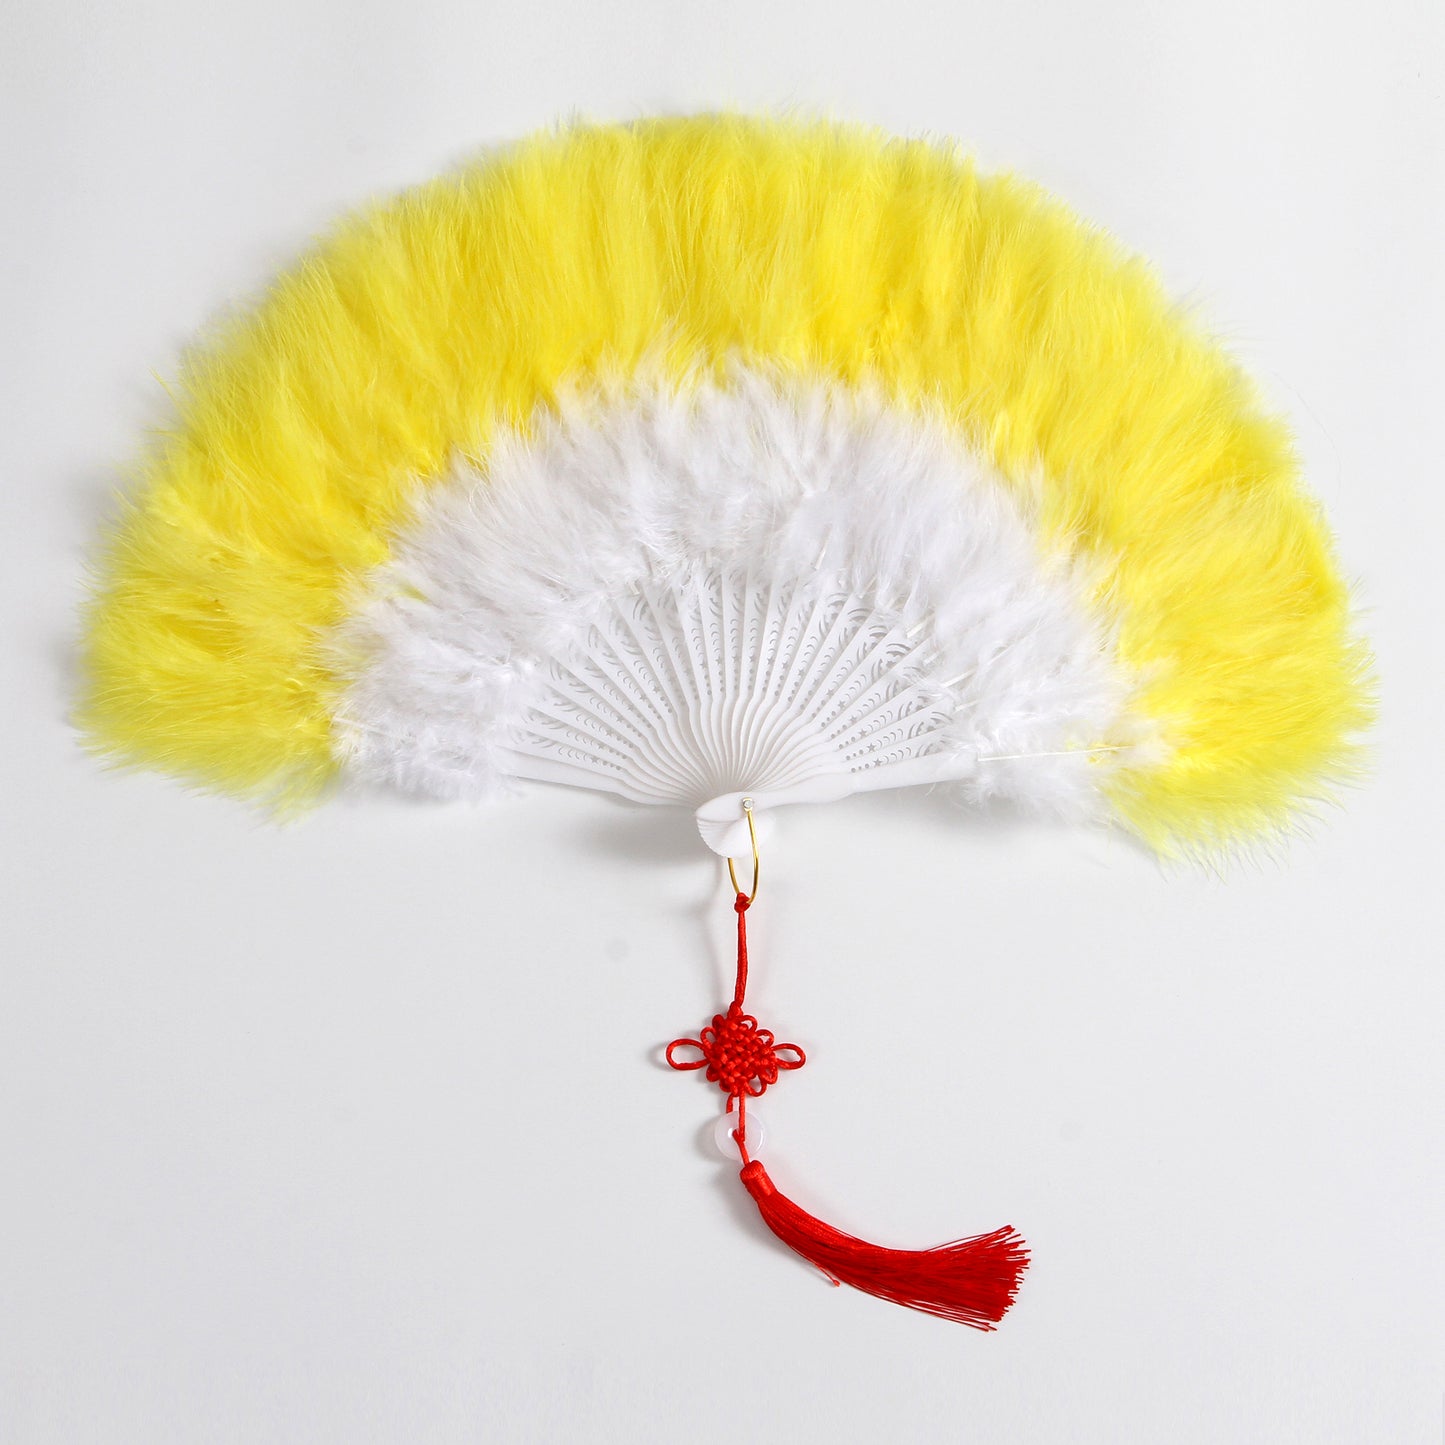 Marabou Feather Fan white+yellow